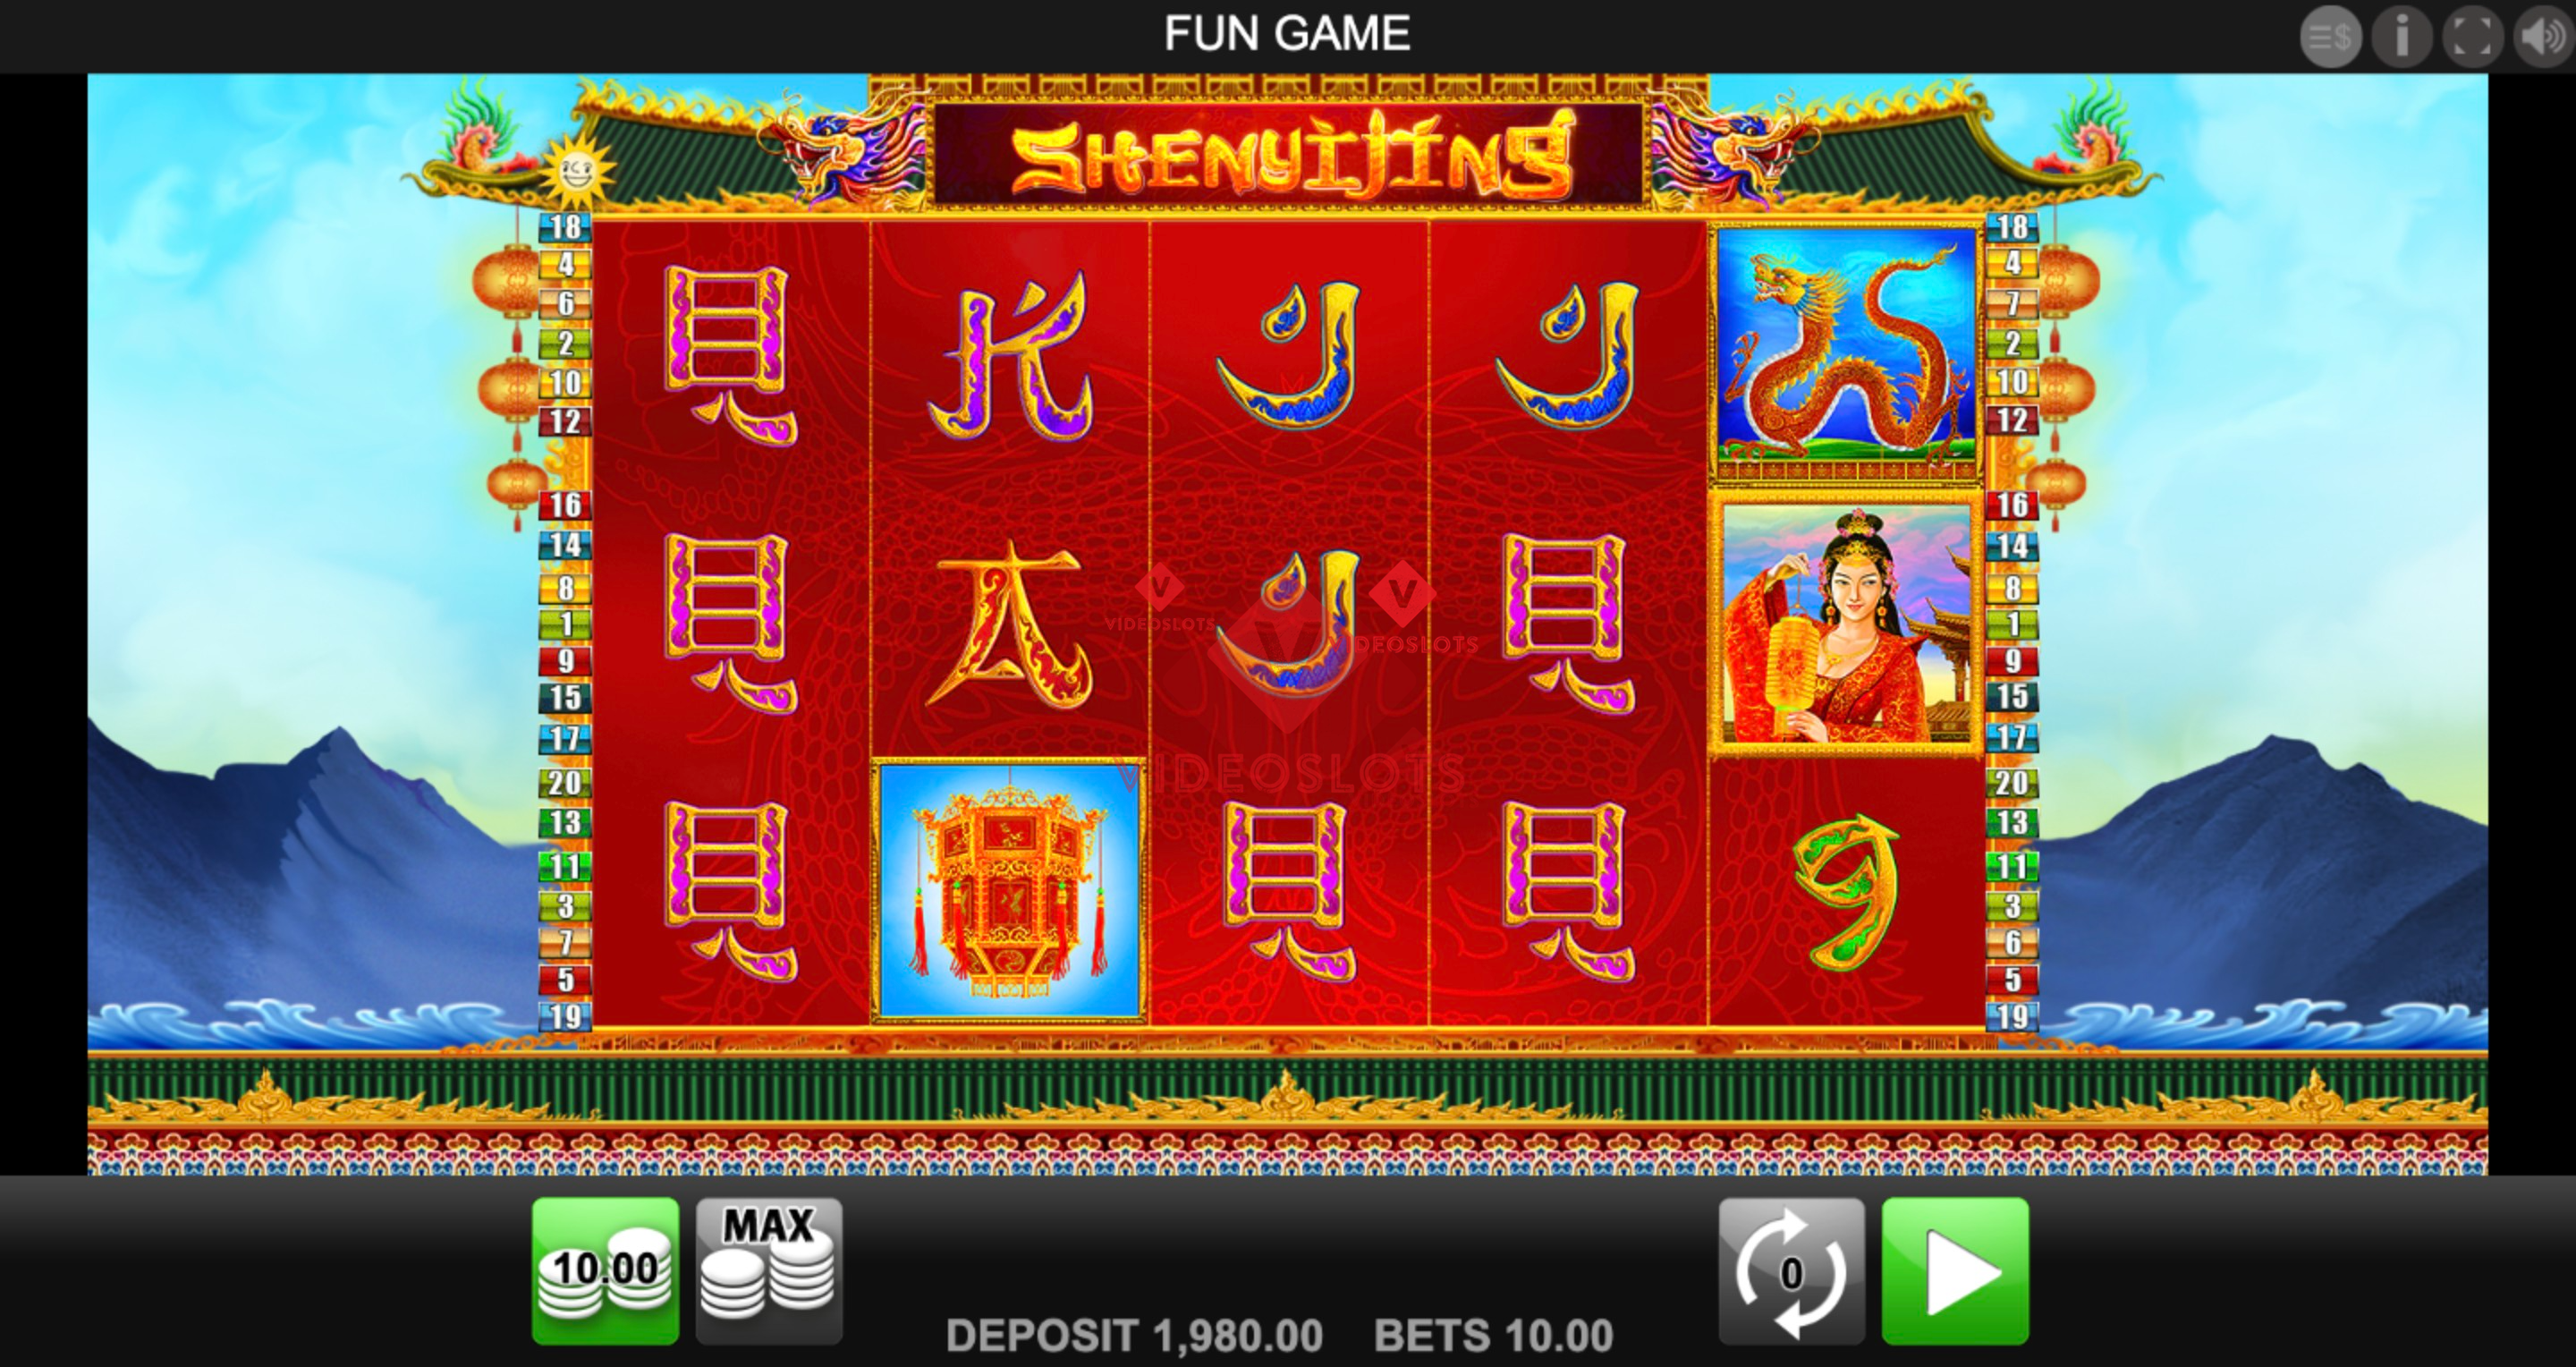 Base Game for Shenyijing slot from Merkur